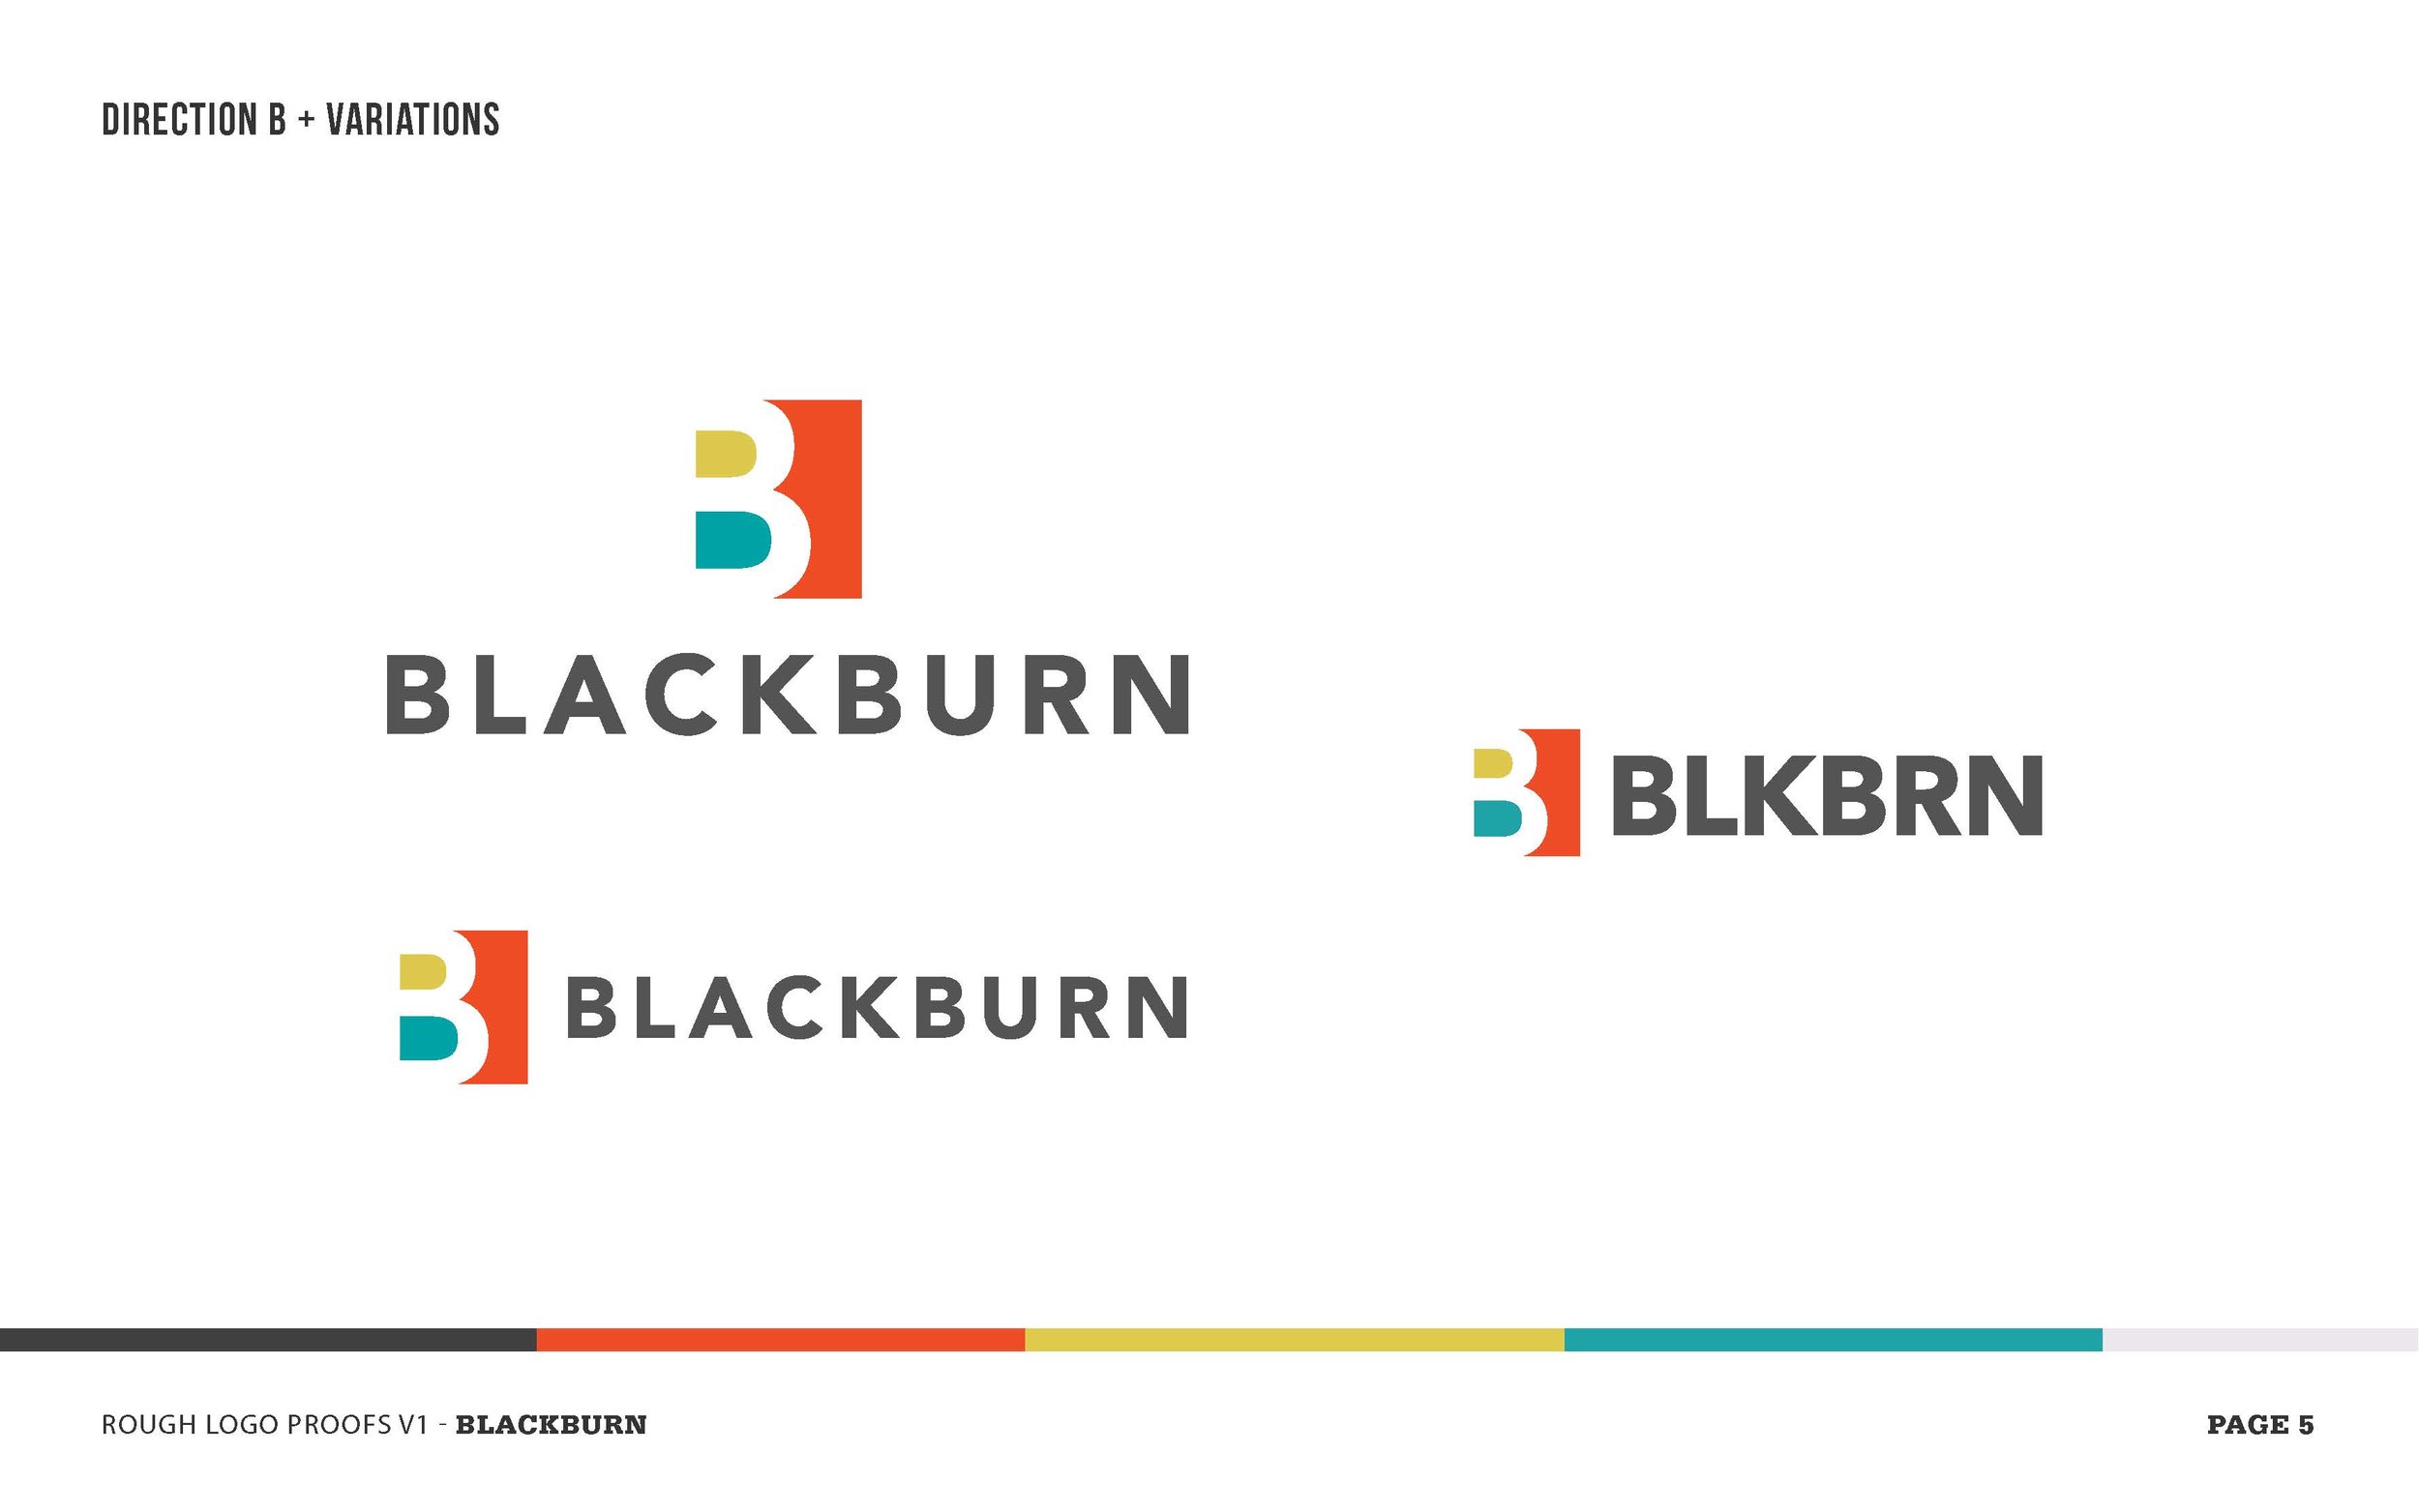 blkbrn-logo-rough-presentation-v1-max_Page_5.jpg